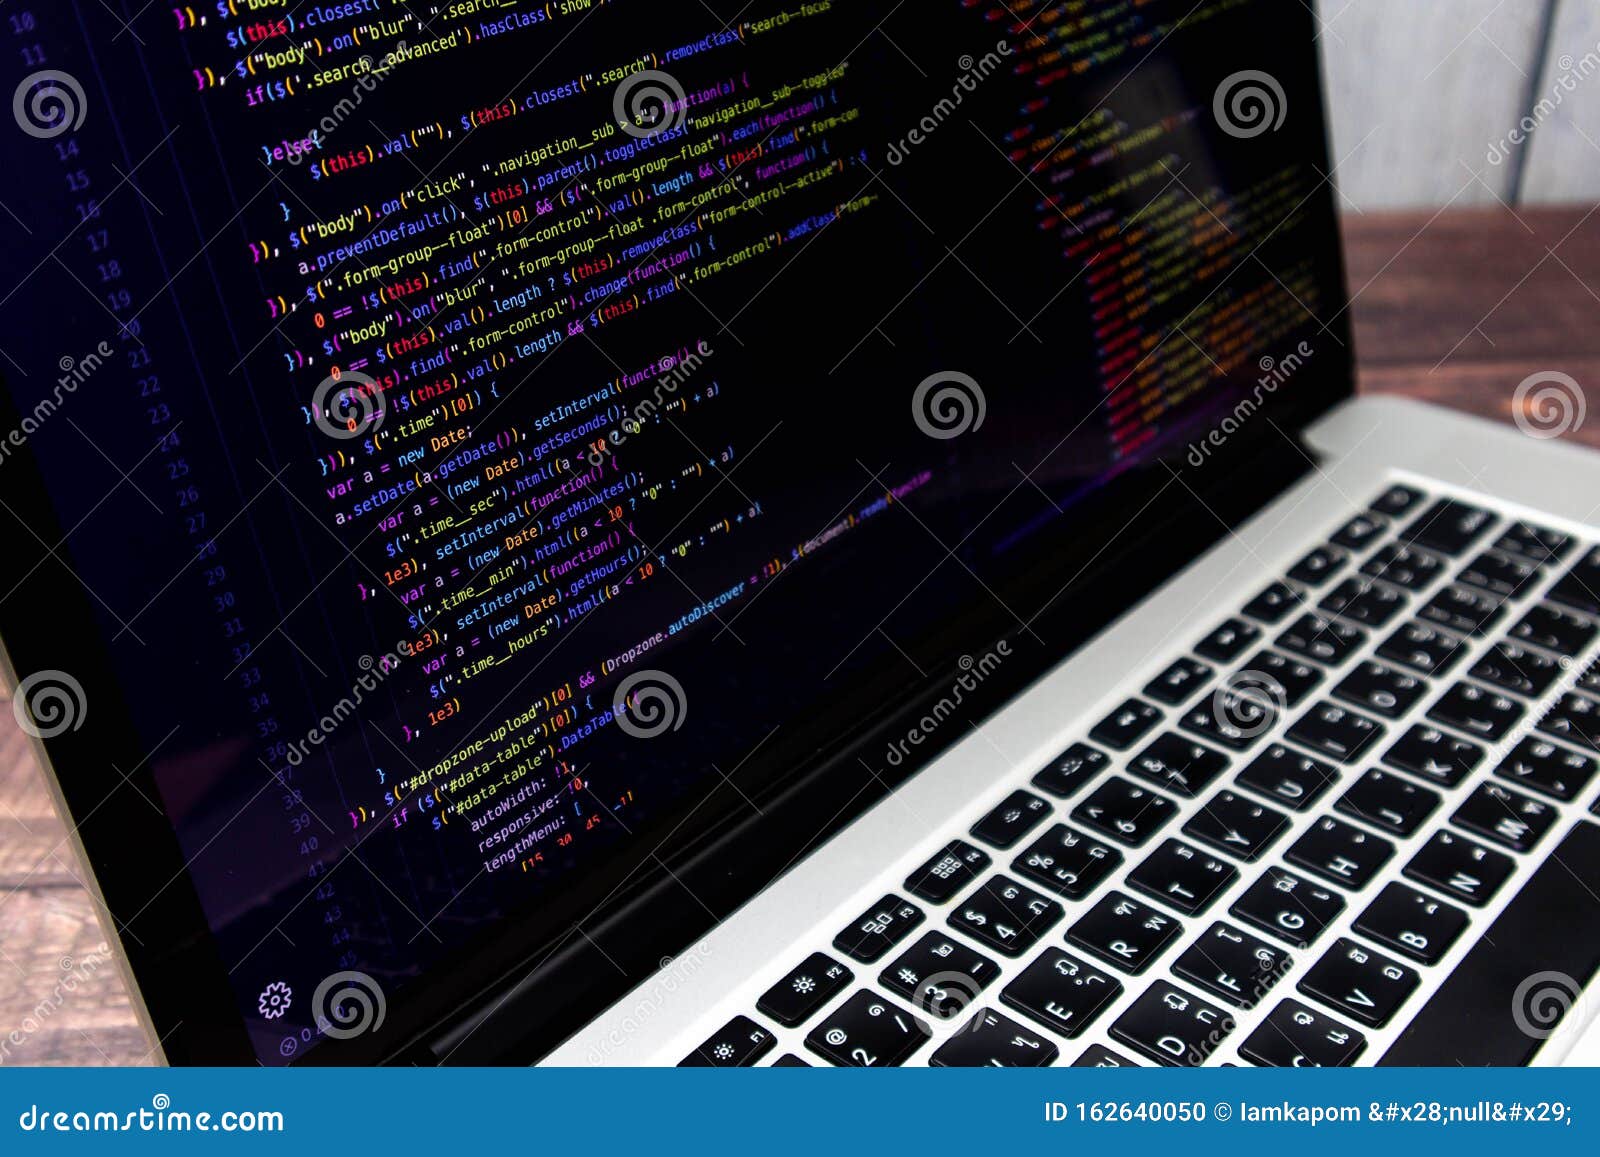 Wallpaper laptop, screen, code, programming hd, picture, image